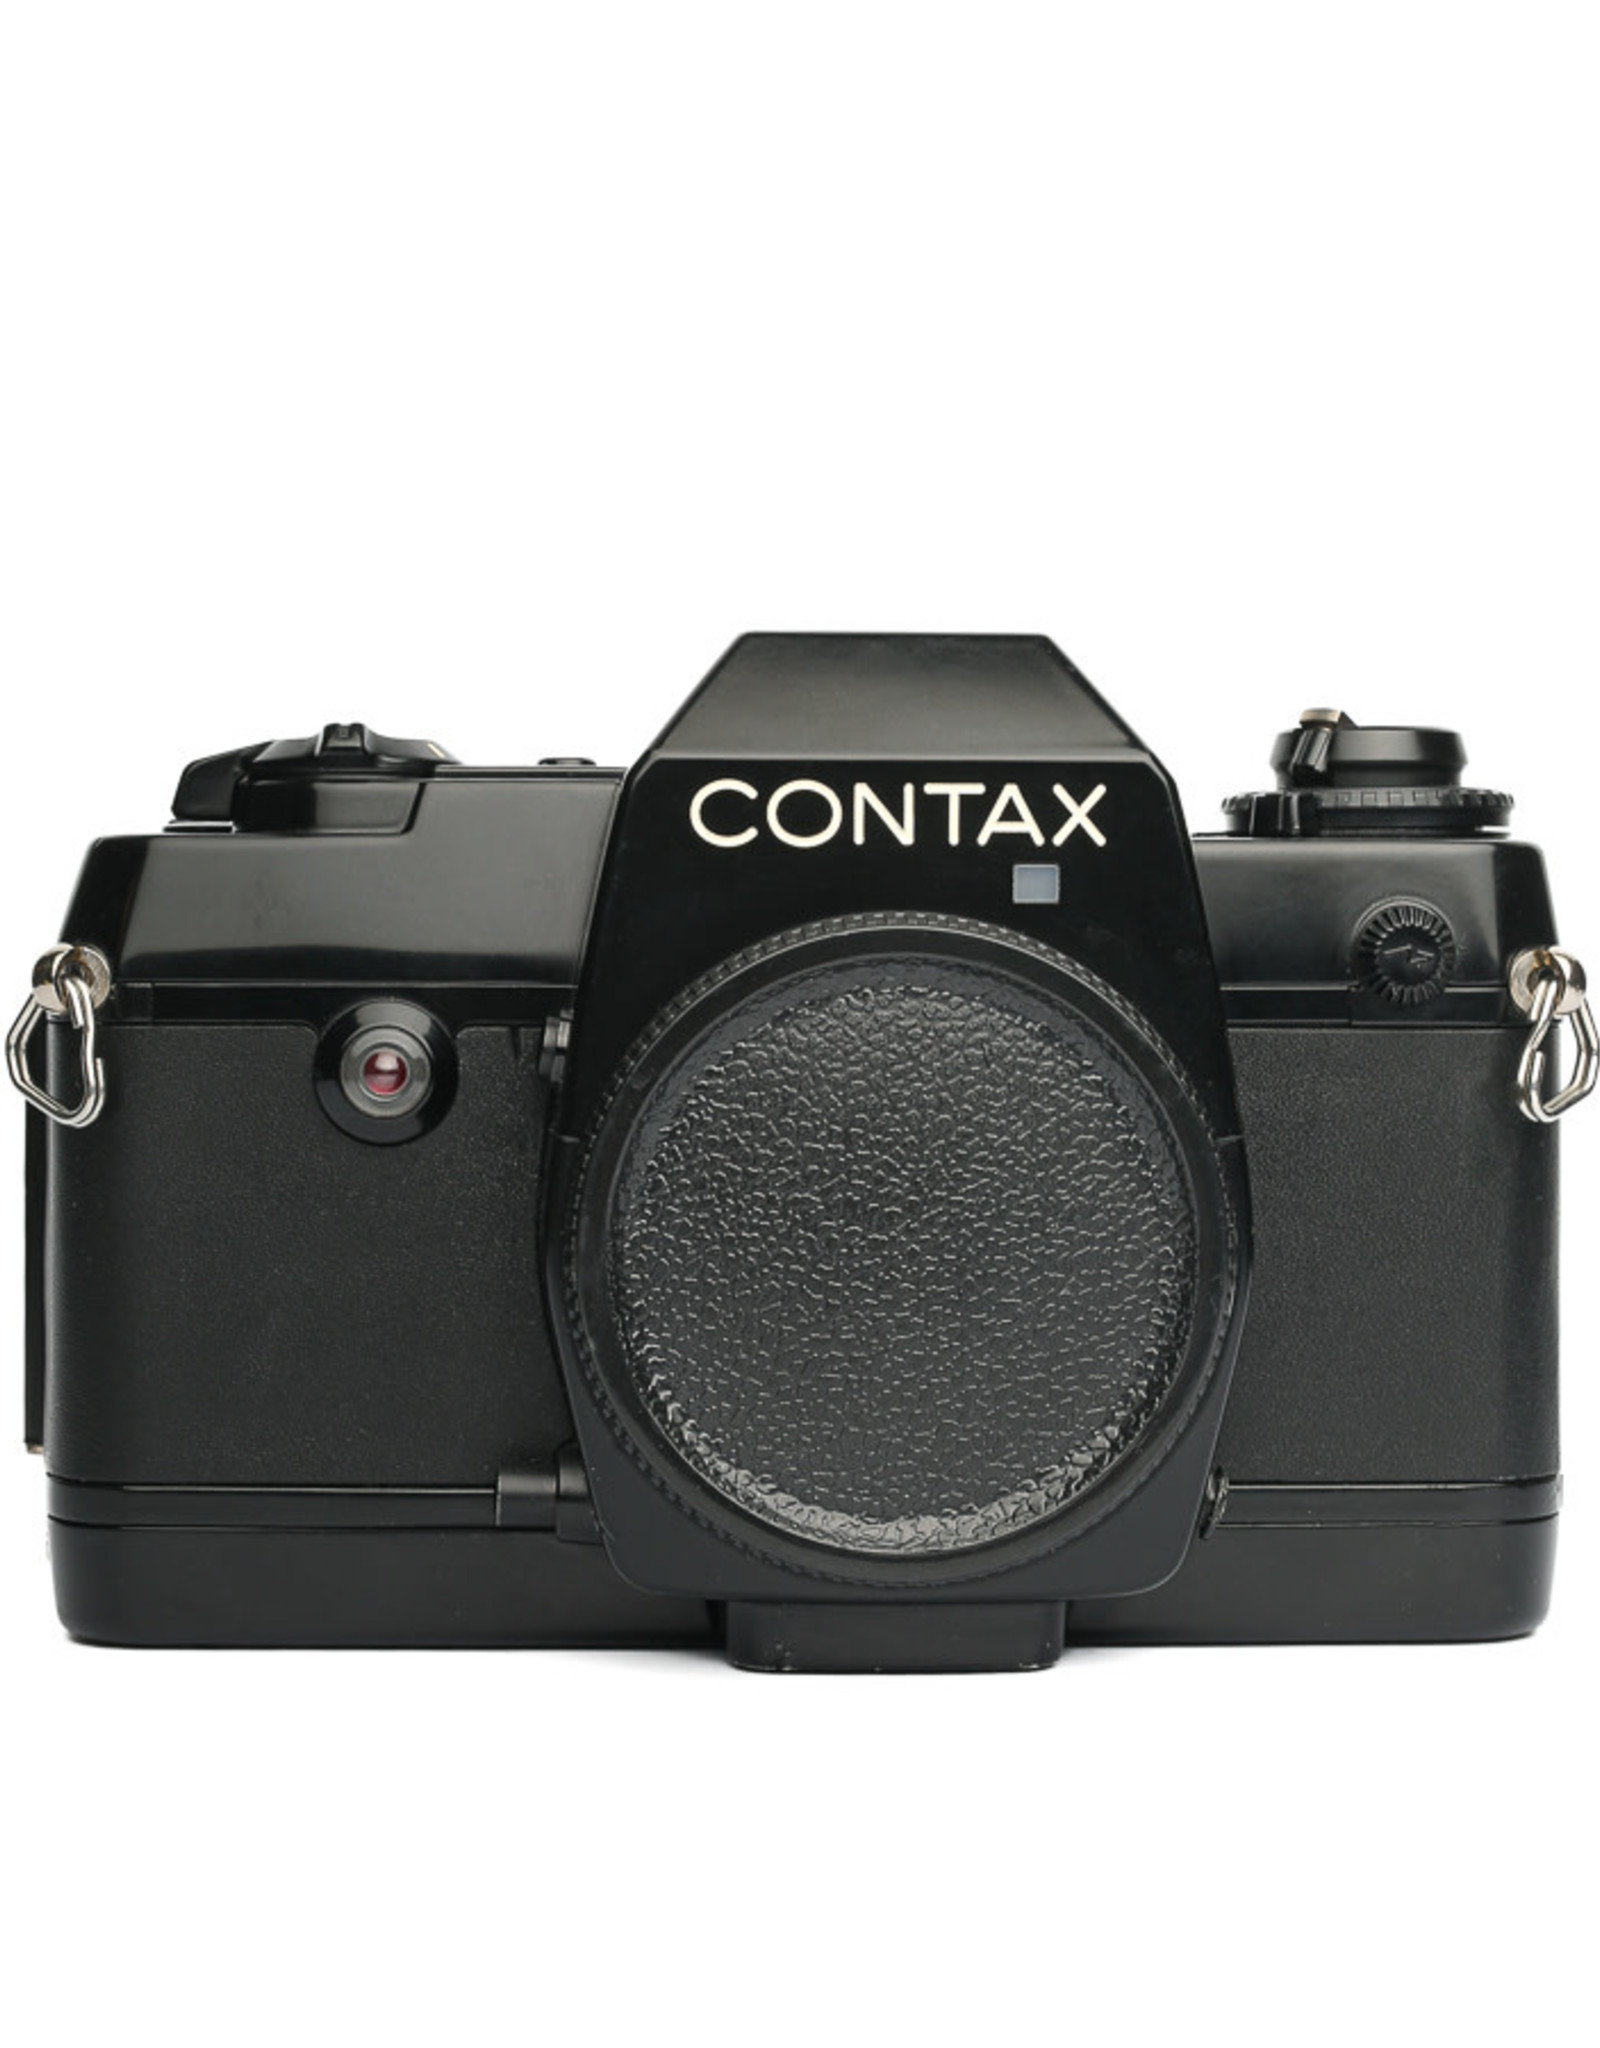 Contax Contax 137 MD 35mm SLR Camera